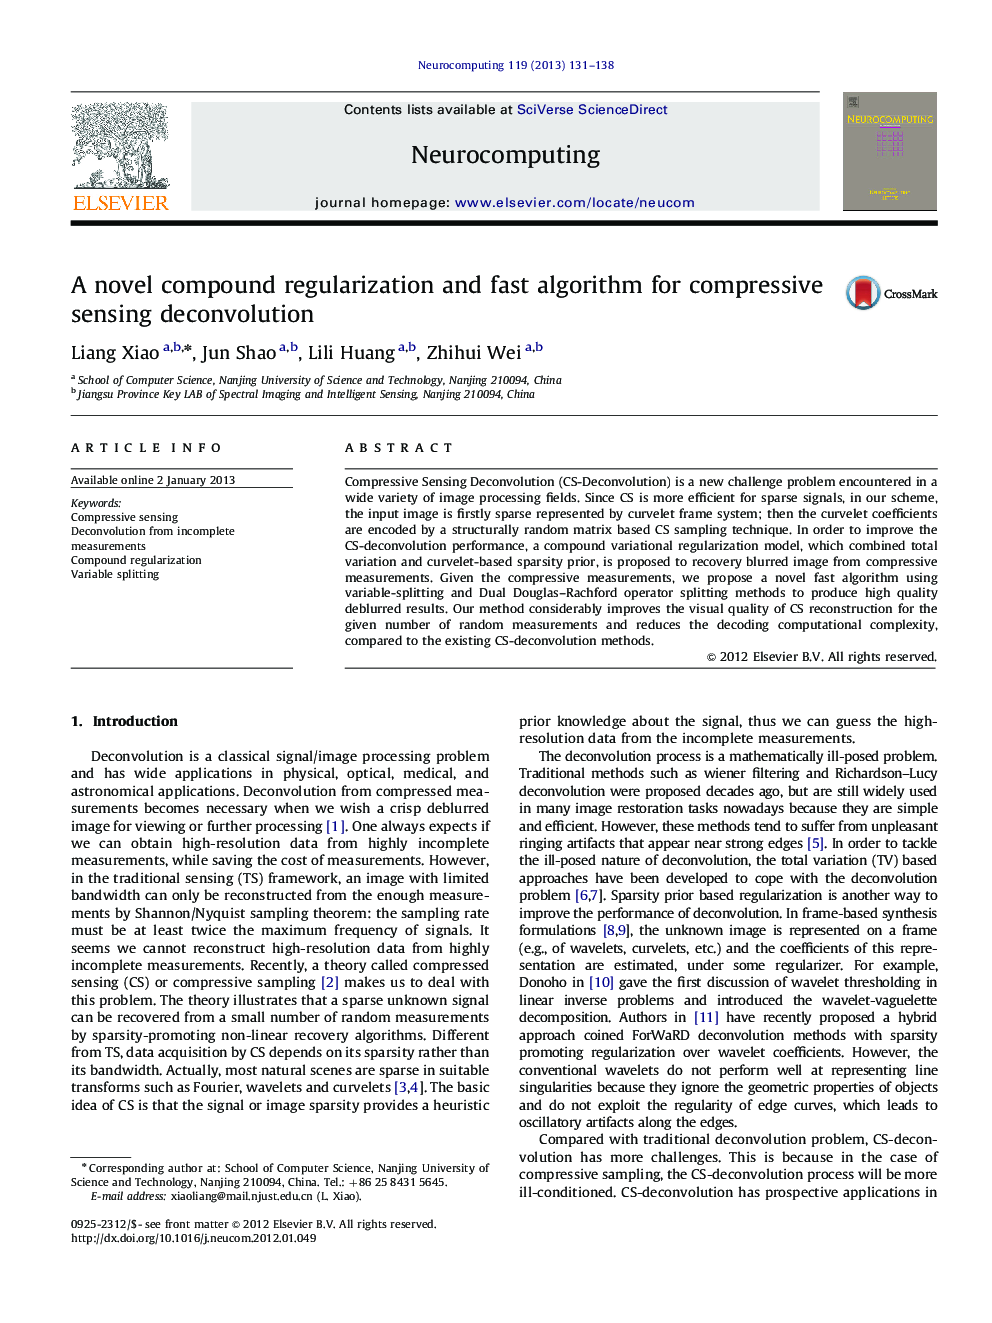 A novel compound regularization and fast algorithm for compressive sensing deconvolution